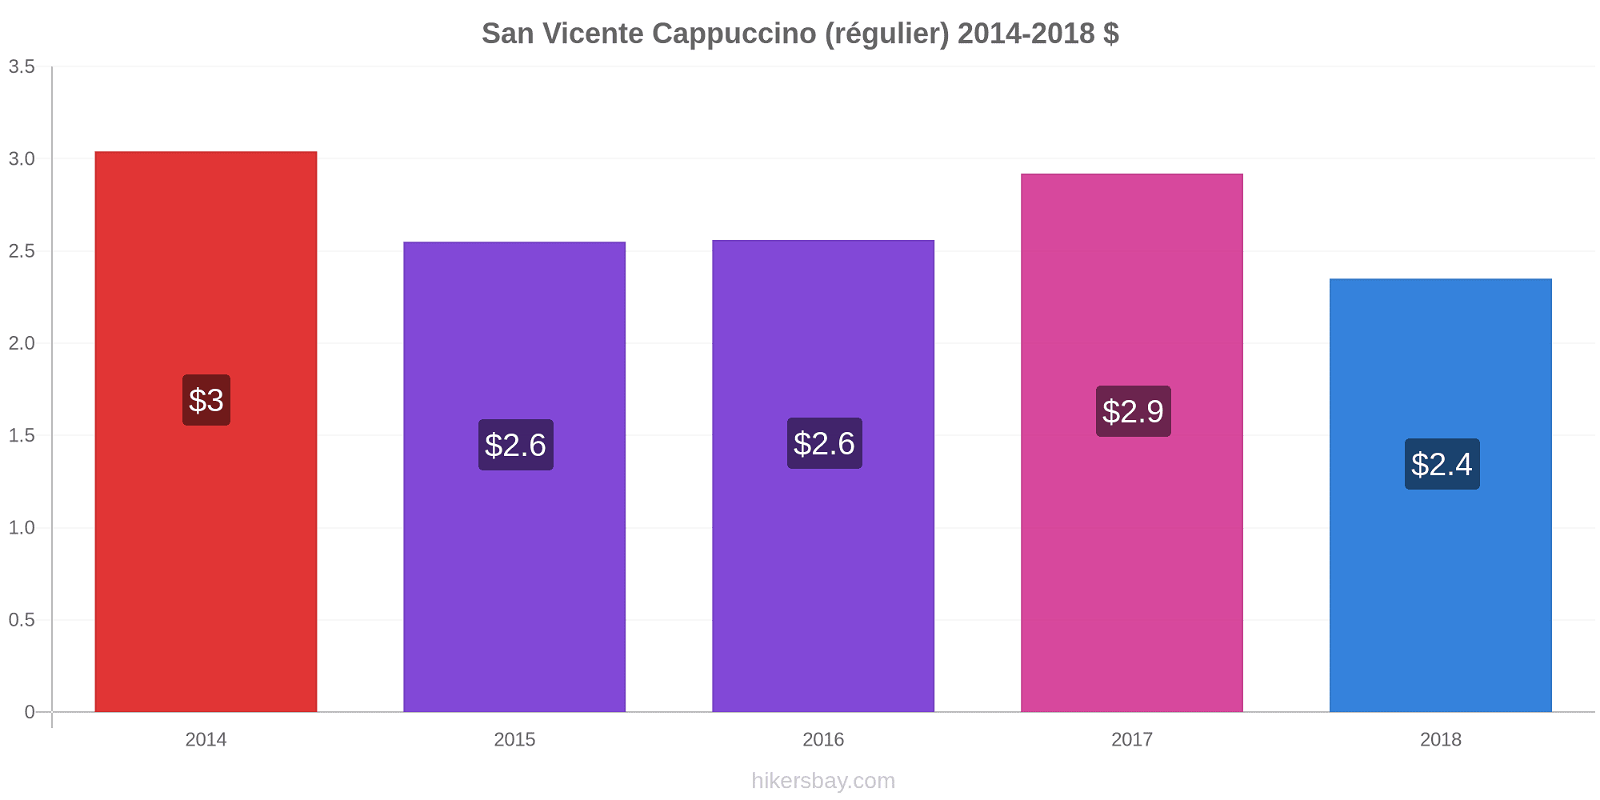 San Vicente changements de prix Cappuccino (régulier) hikersbay.com